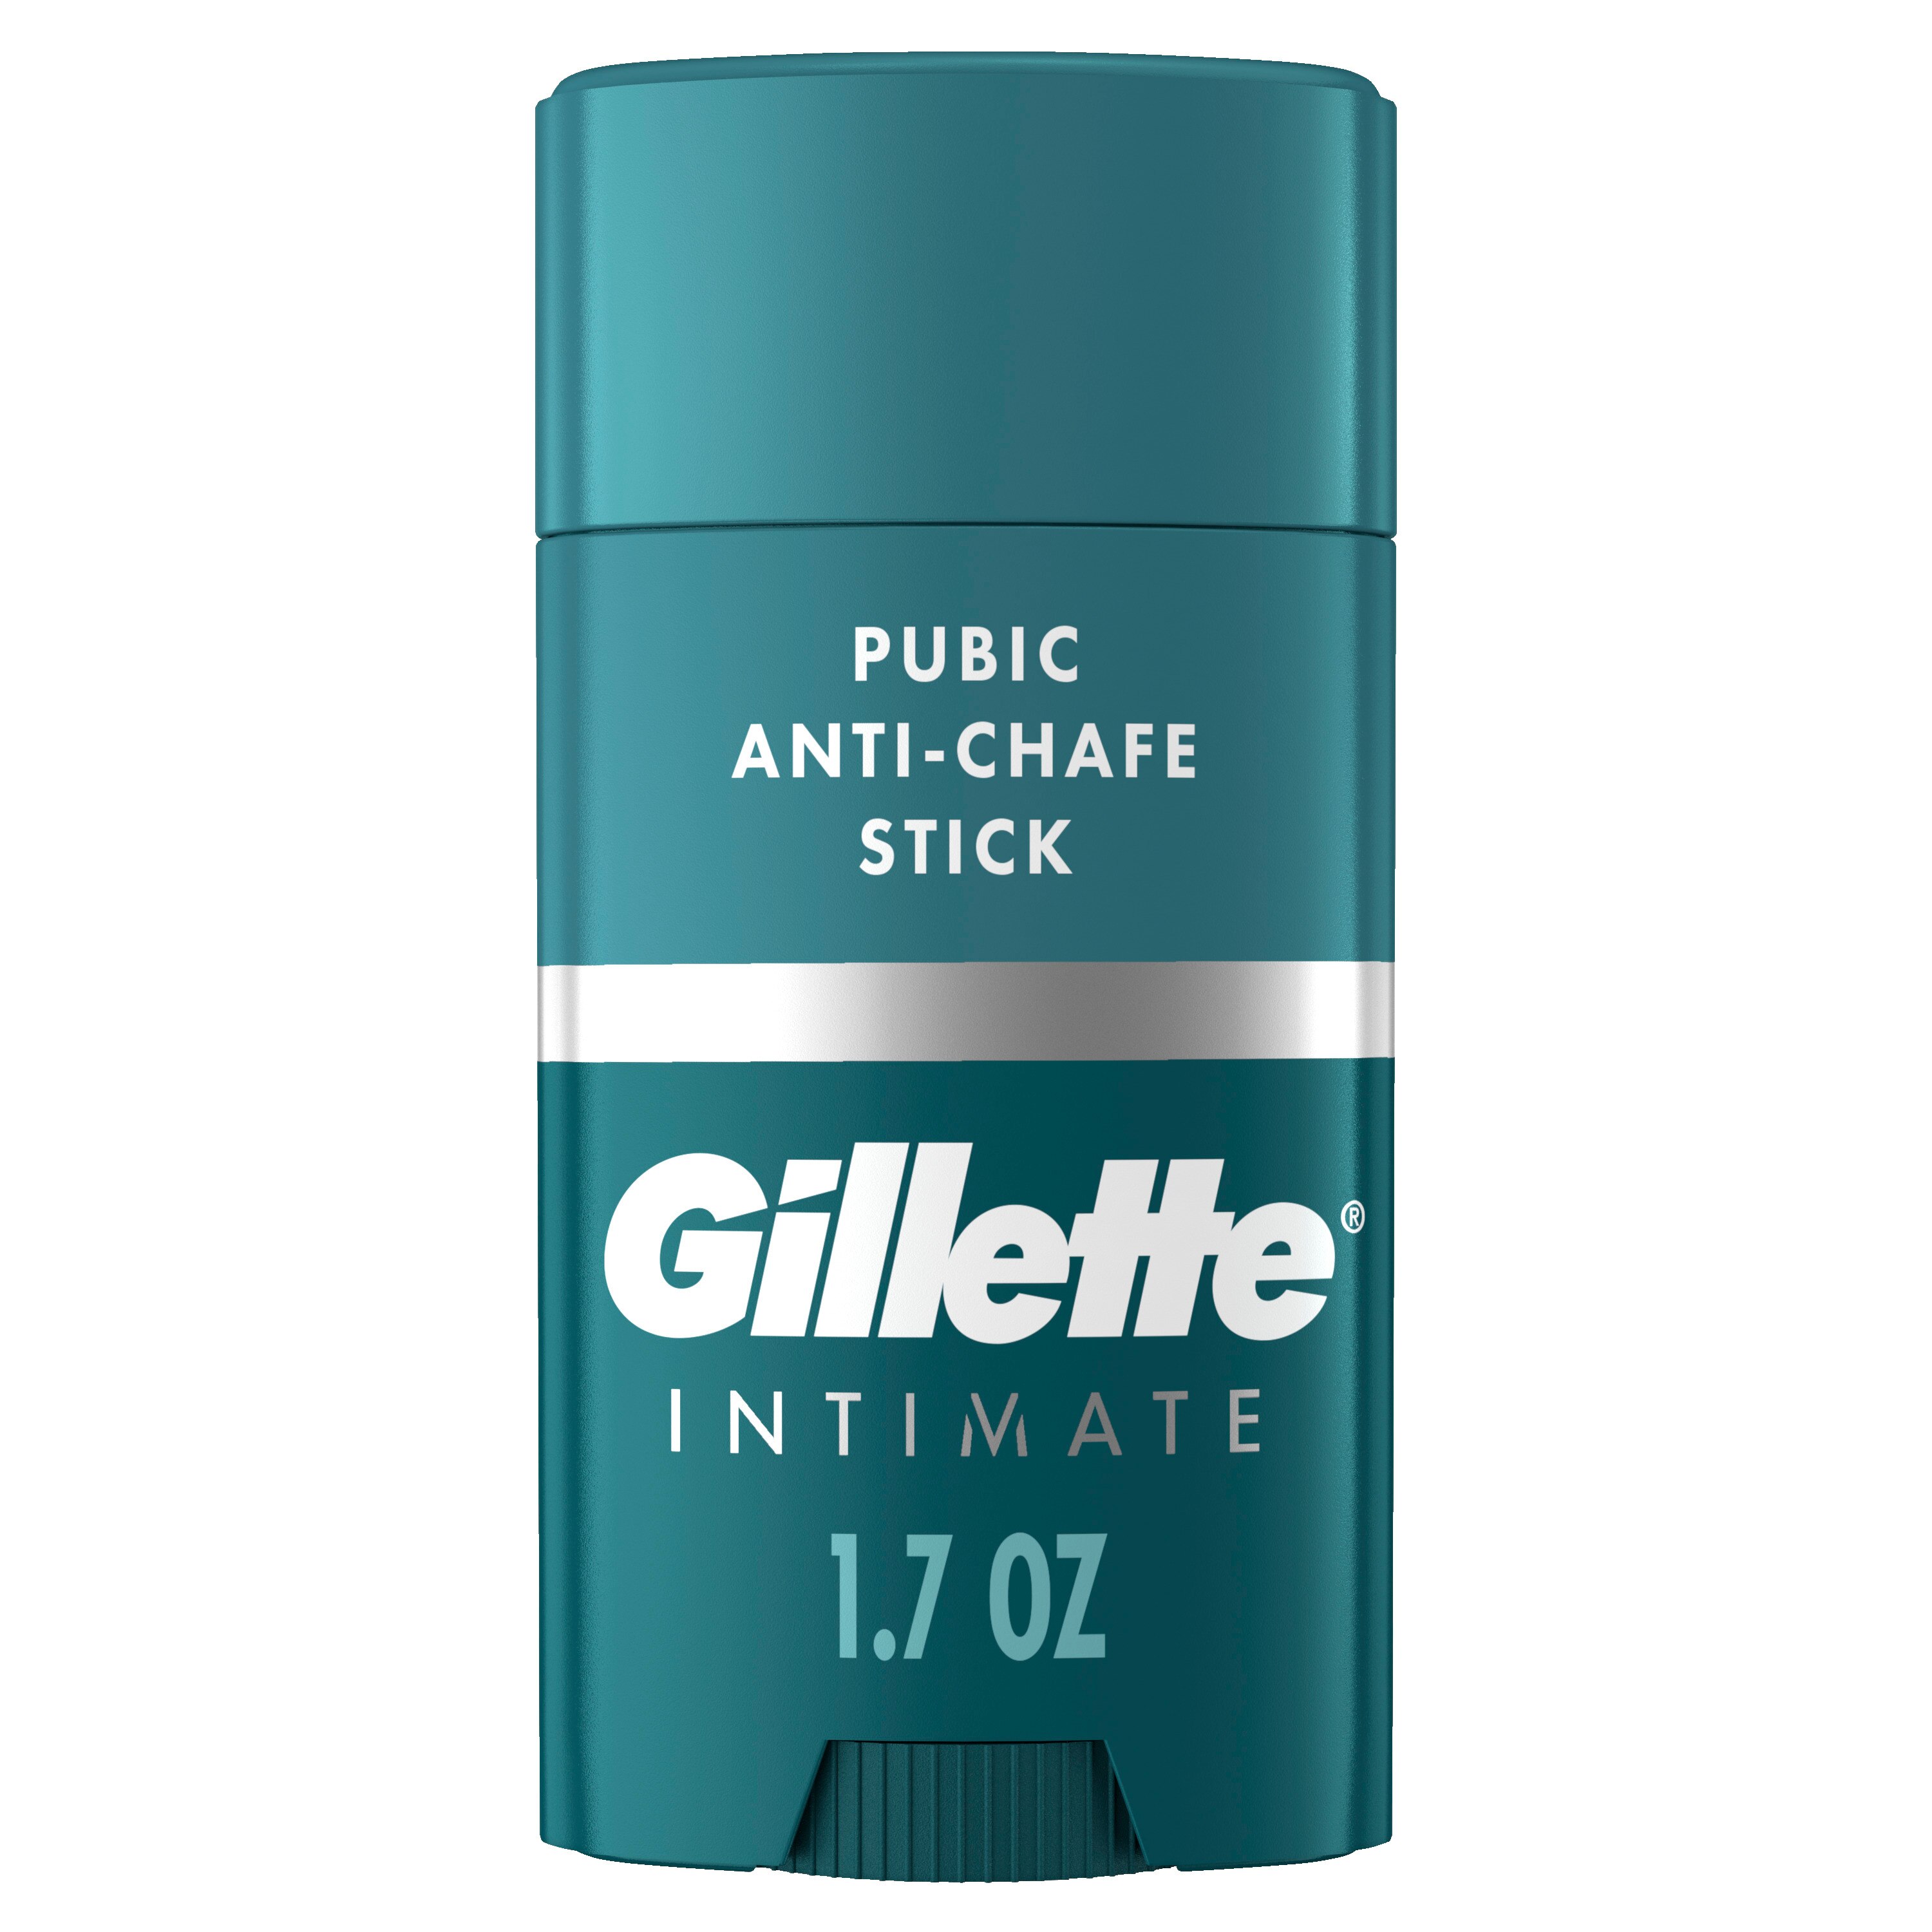 Gillette Intimate Pubic Anti-Chafe Stick, 1.7 Oz , CVS